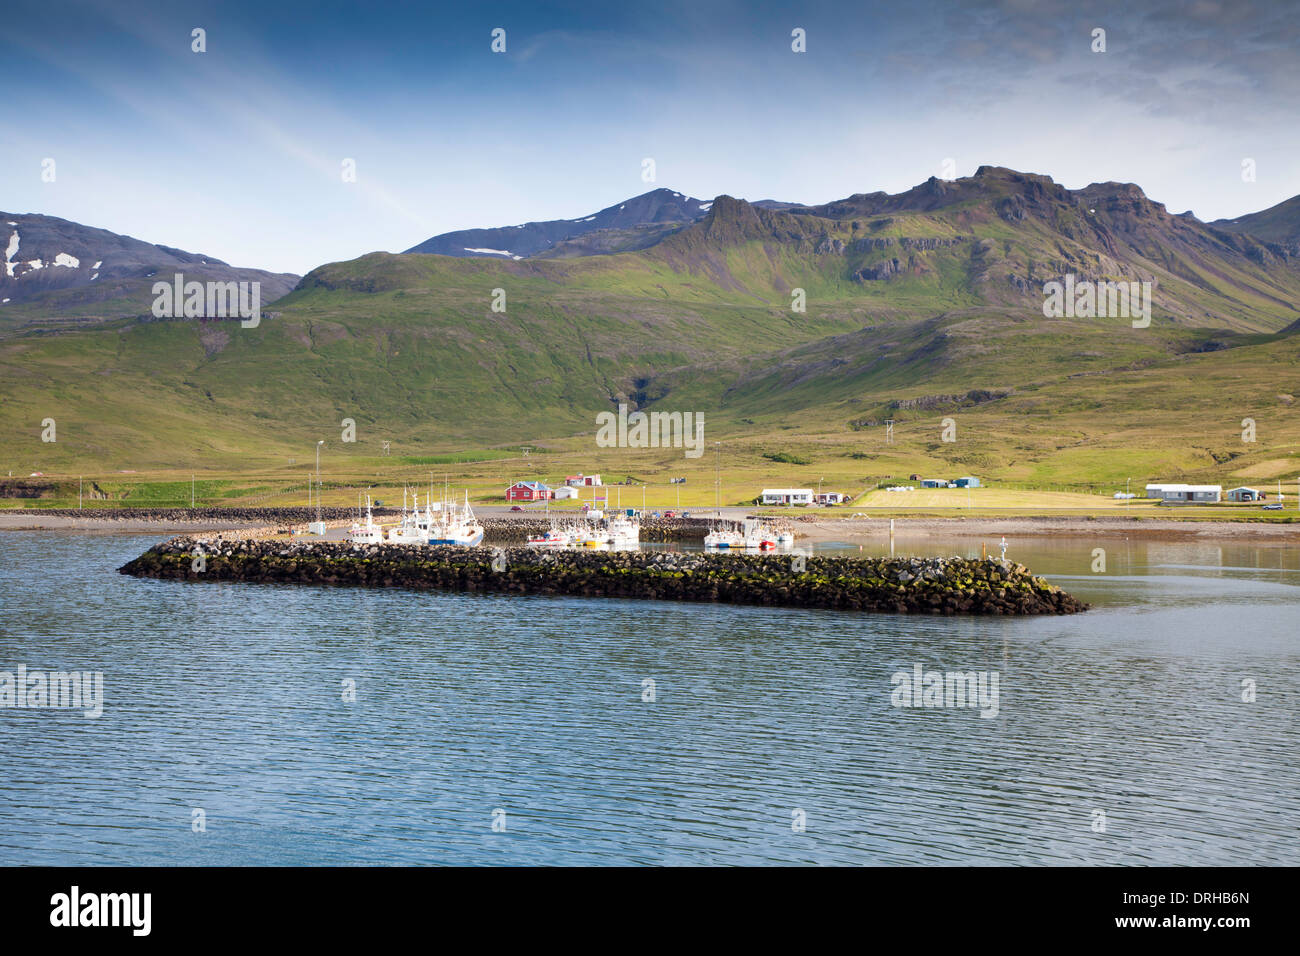 Barche rifugiandosi dietro il frangiflutti a Grundarfjörður, Islanda Foto Stock